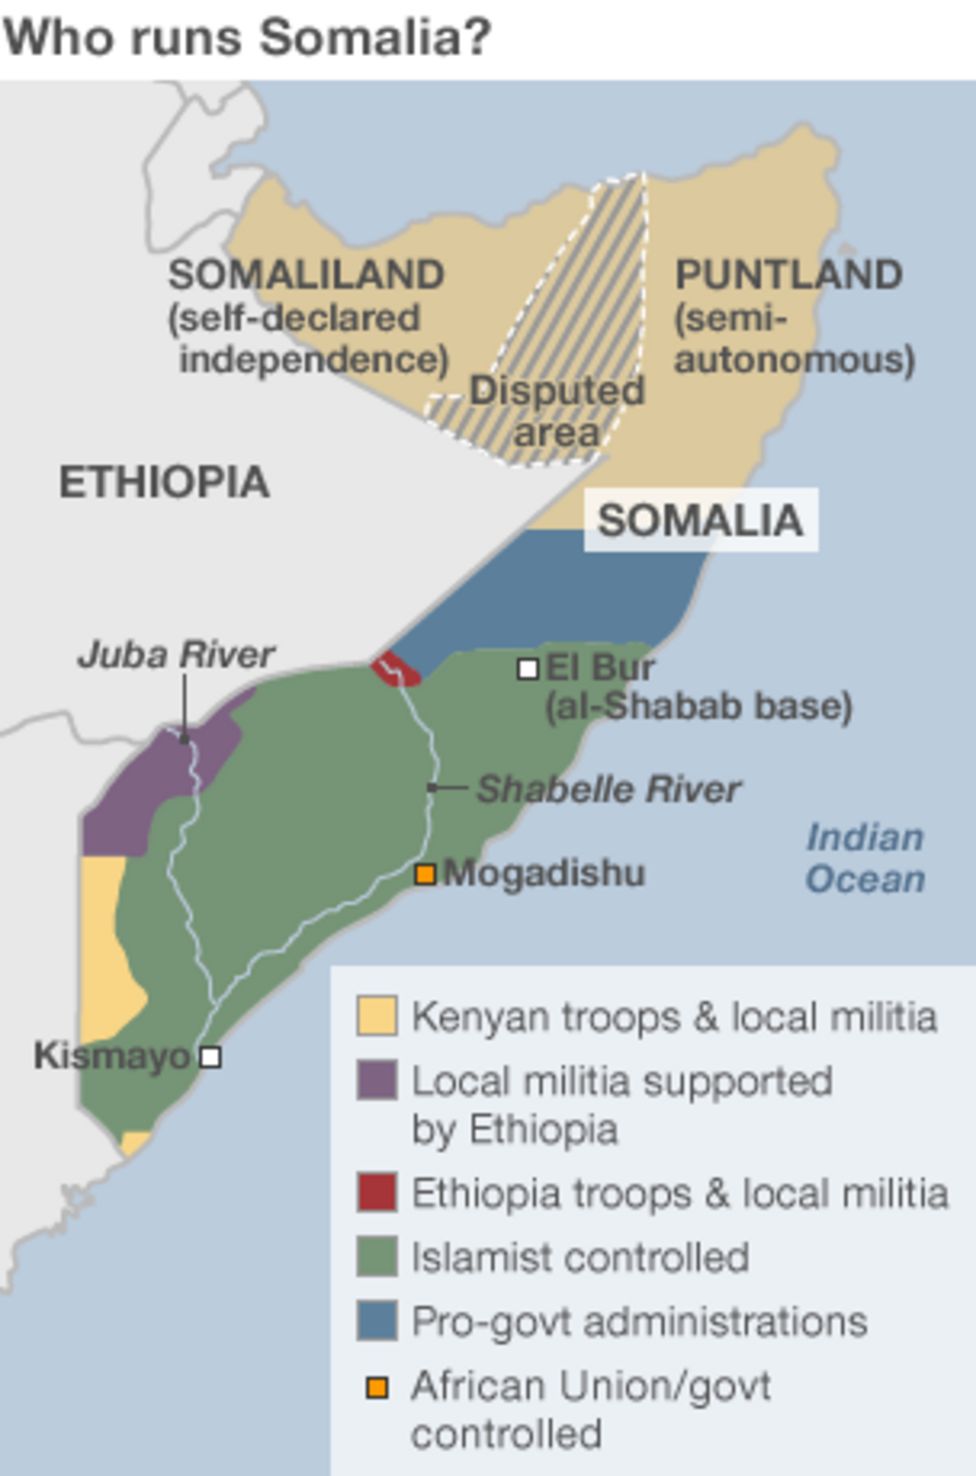 Somalia oil exploration Drilling begins in Puntland BBC News